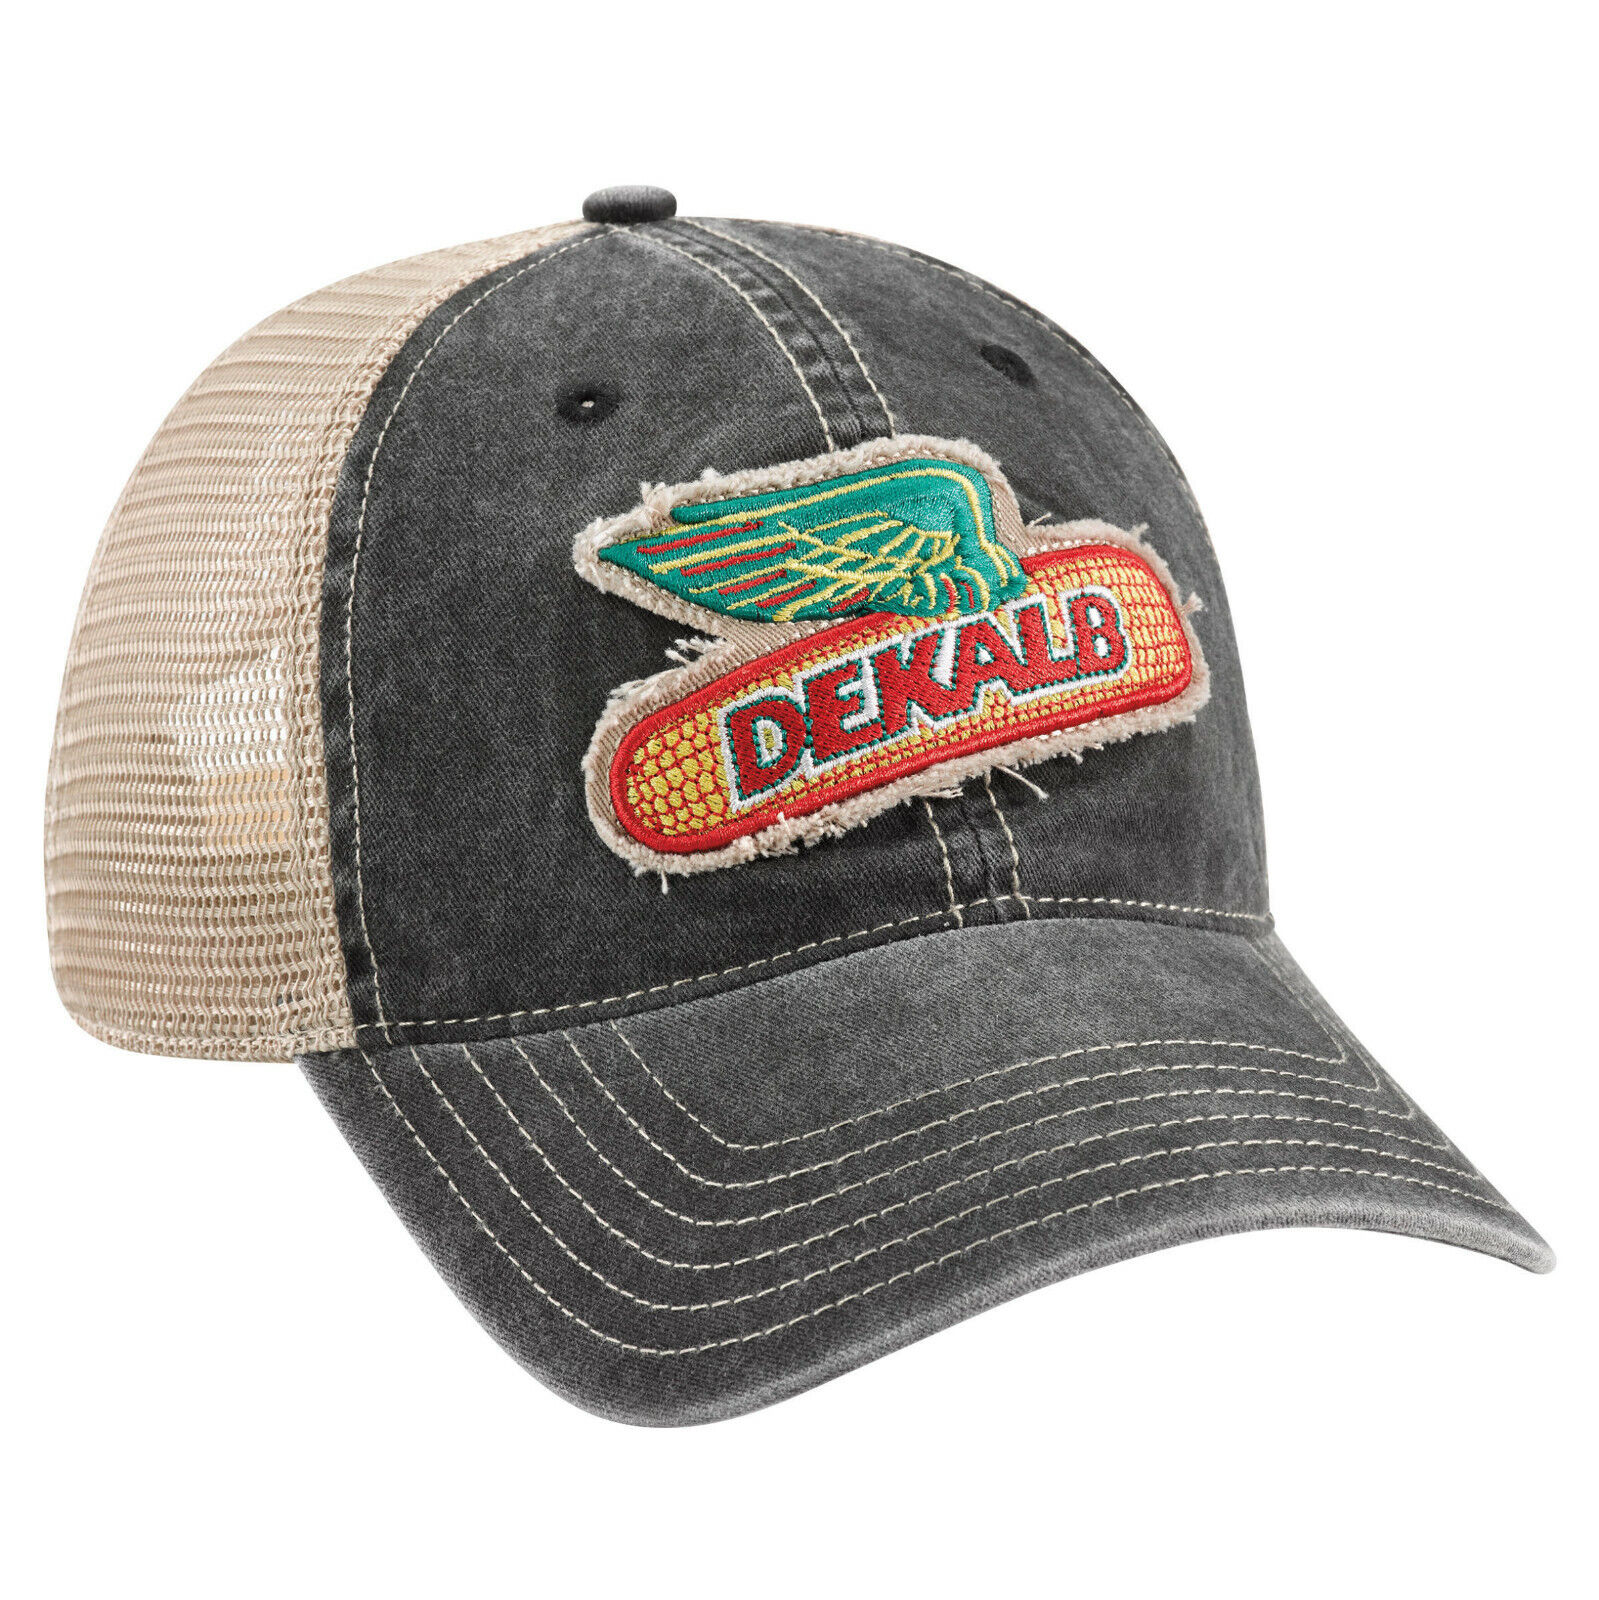 DEKALB SEED Demin Vintage Trademark Logo Cap Hat New Ballcap Corn Distressed